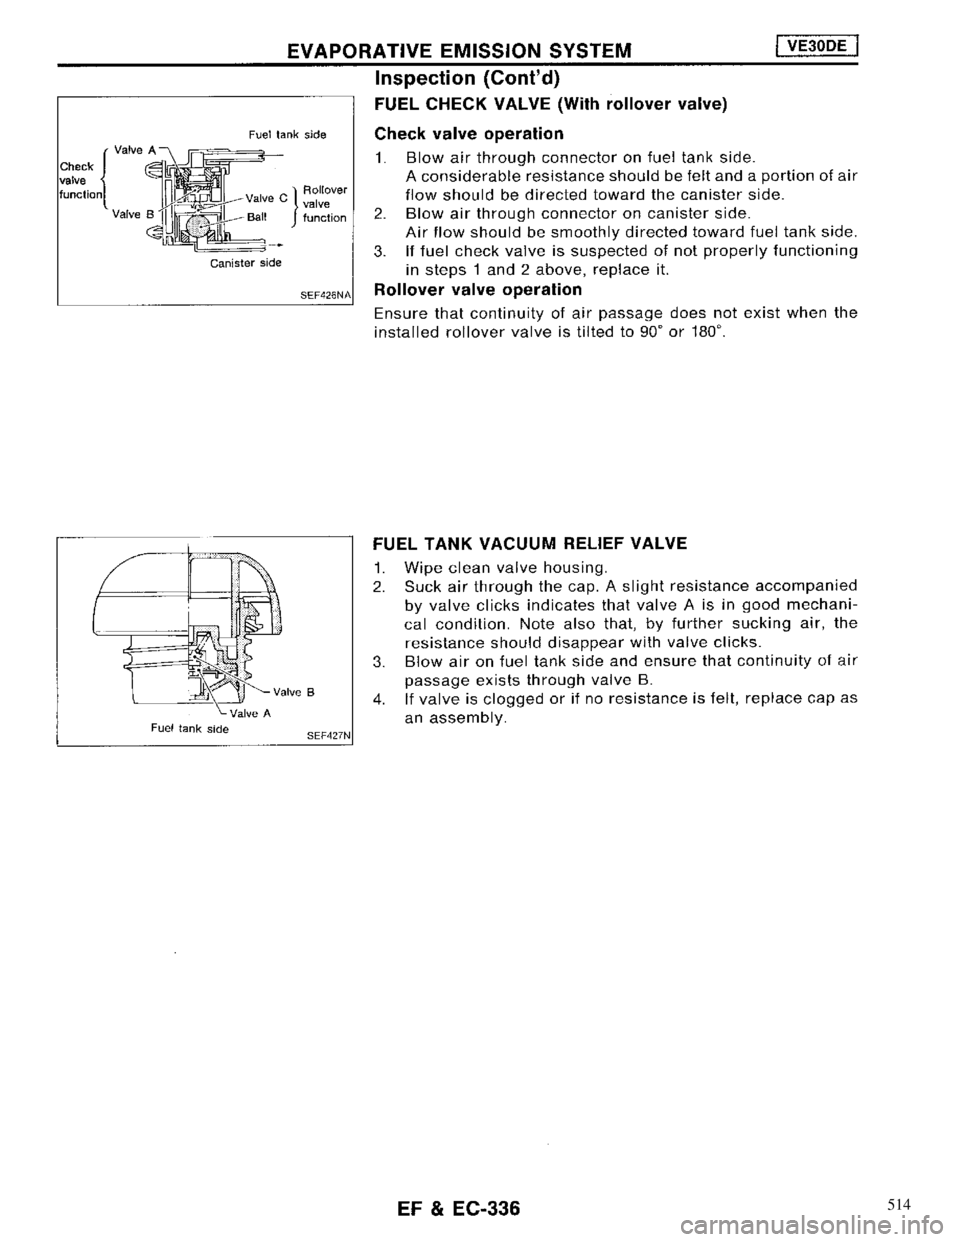 NISSAN MAXIMA 1994 A32 / 4.G Engine Fuel And Emission Control System Workshop Manual 514 